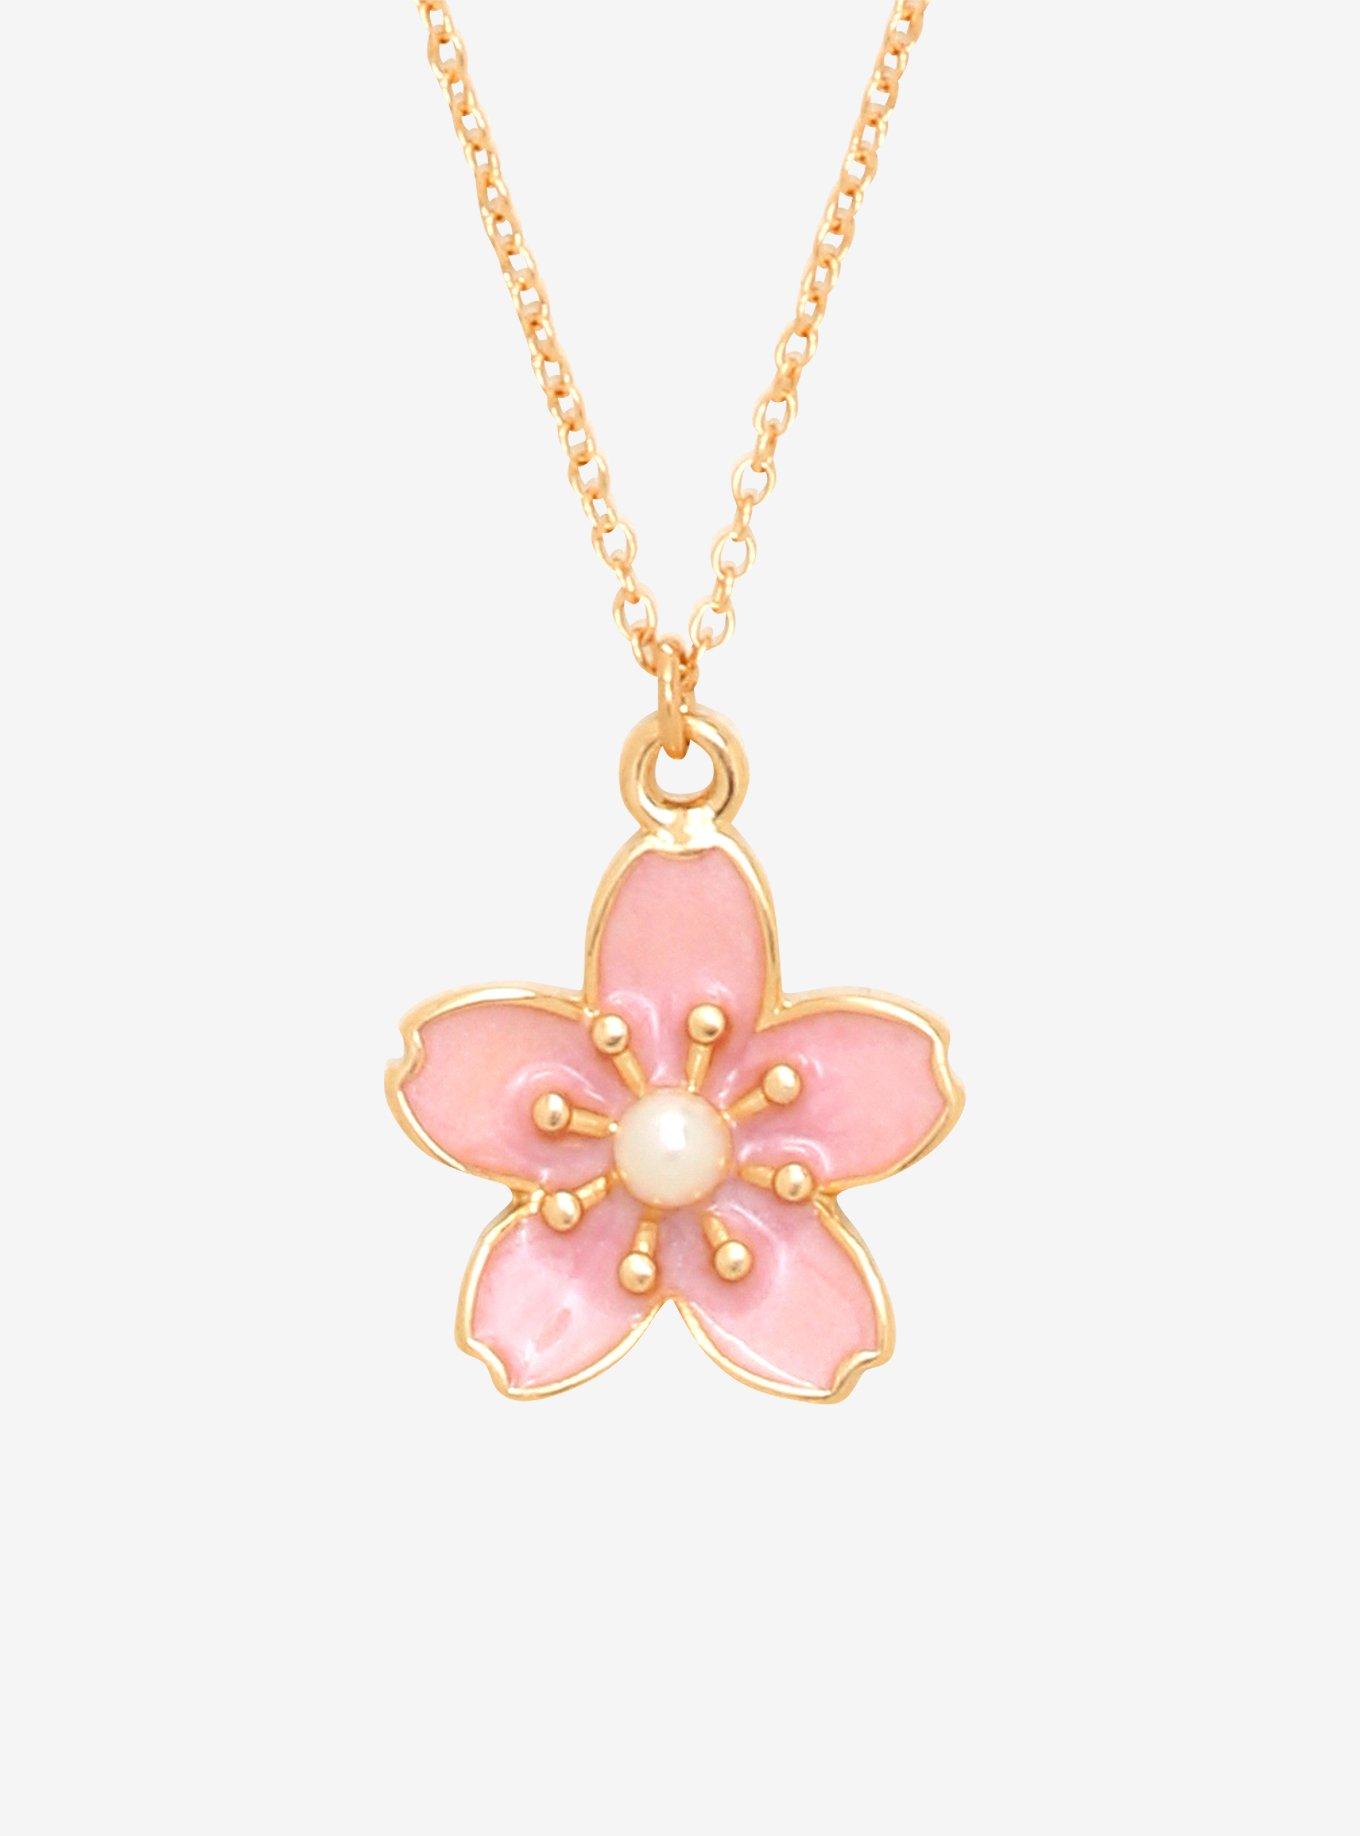 Sakura Cherry Blossom four-flower pendant (with optional chain)